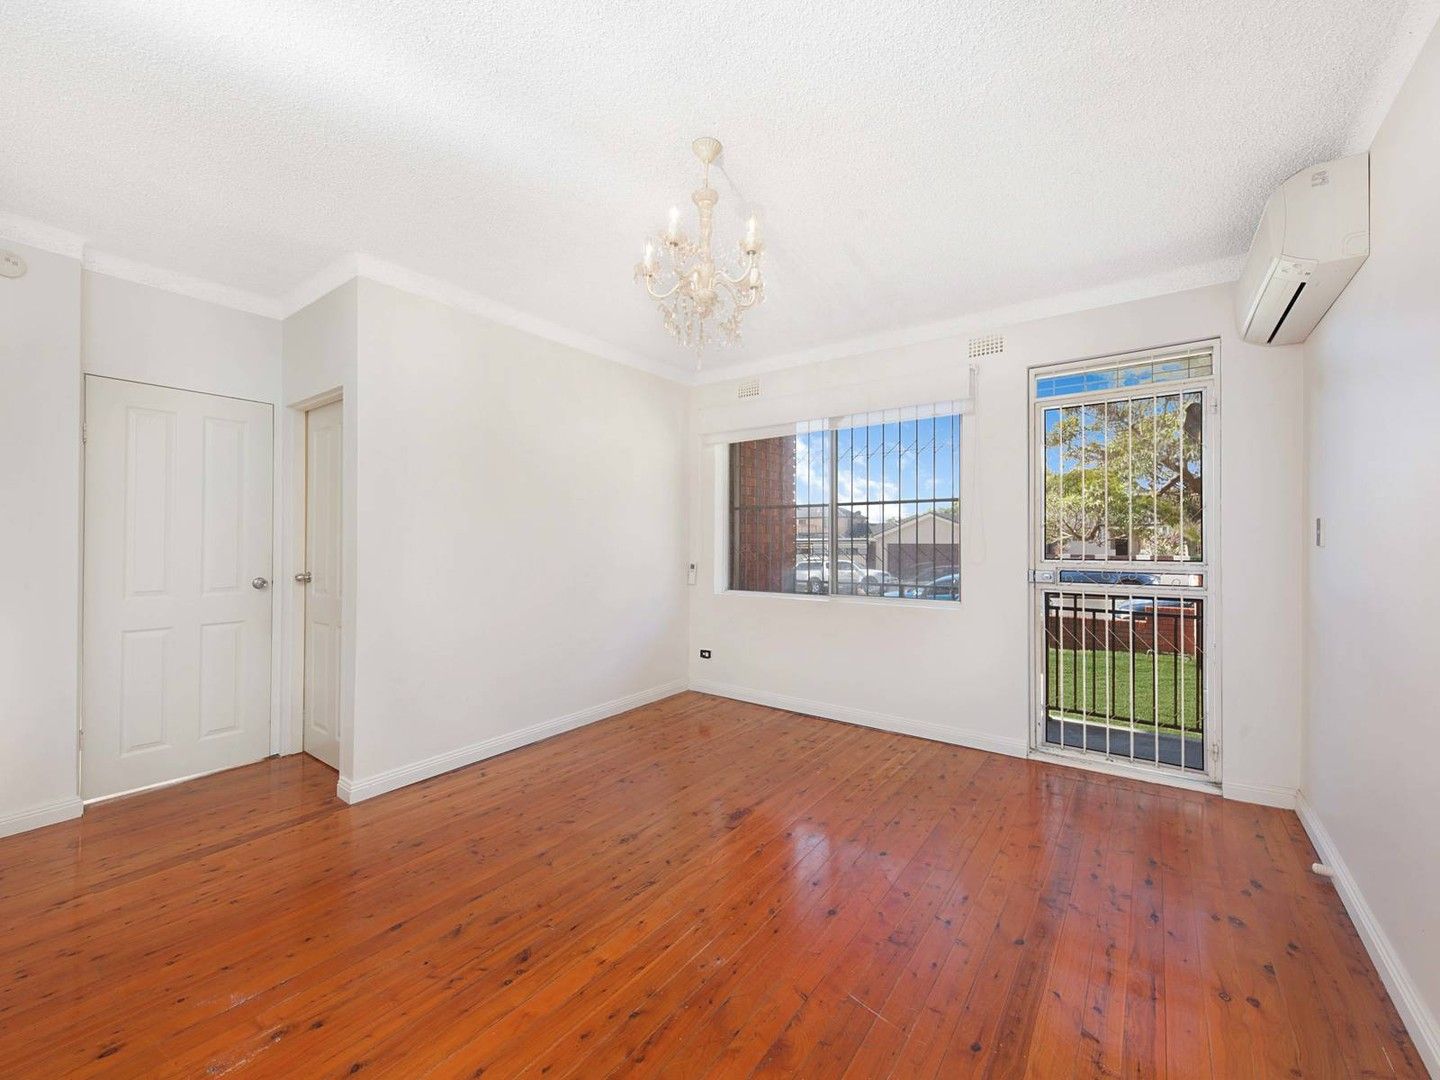 2 bedrooms Apartment / Unit / Flat in 3/54 Barremma Road LAKEMBA NSW, 2195